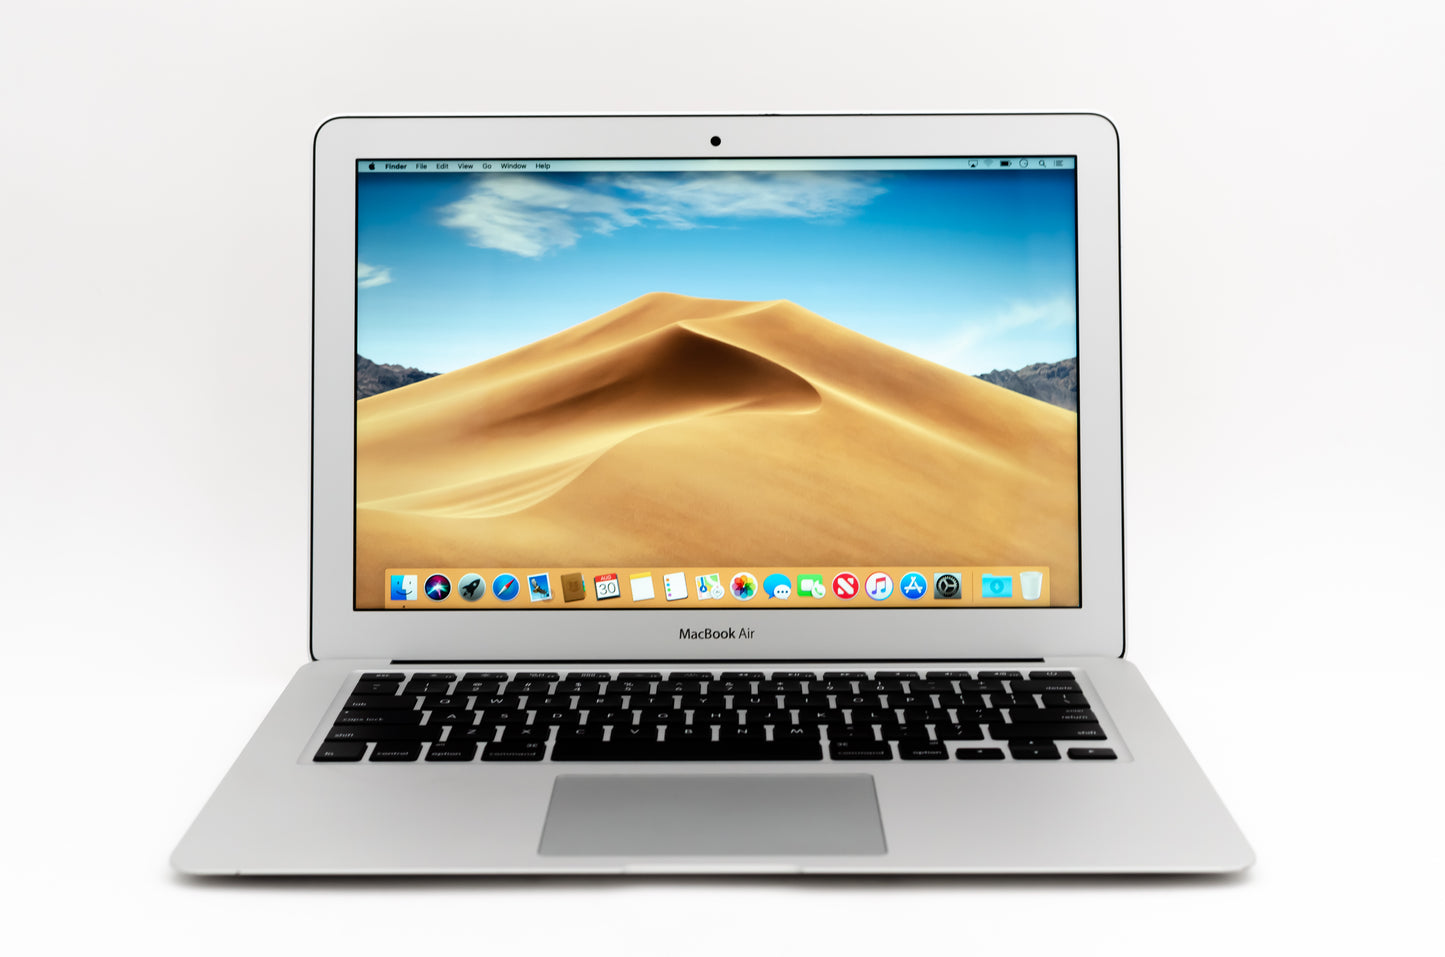 apple-mid-2013-13.3-inch-macbook-air-a1466-aluminum-dci7 - 1.7ghz processor, 8gb ram, hd 6000 - 1.5gb gpu-md761ll/a-1